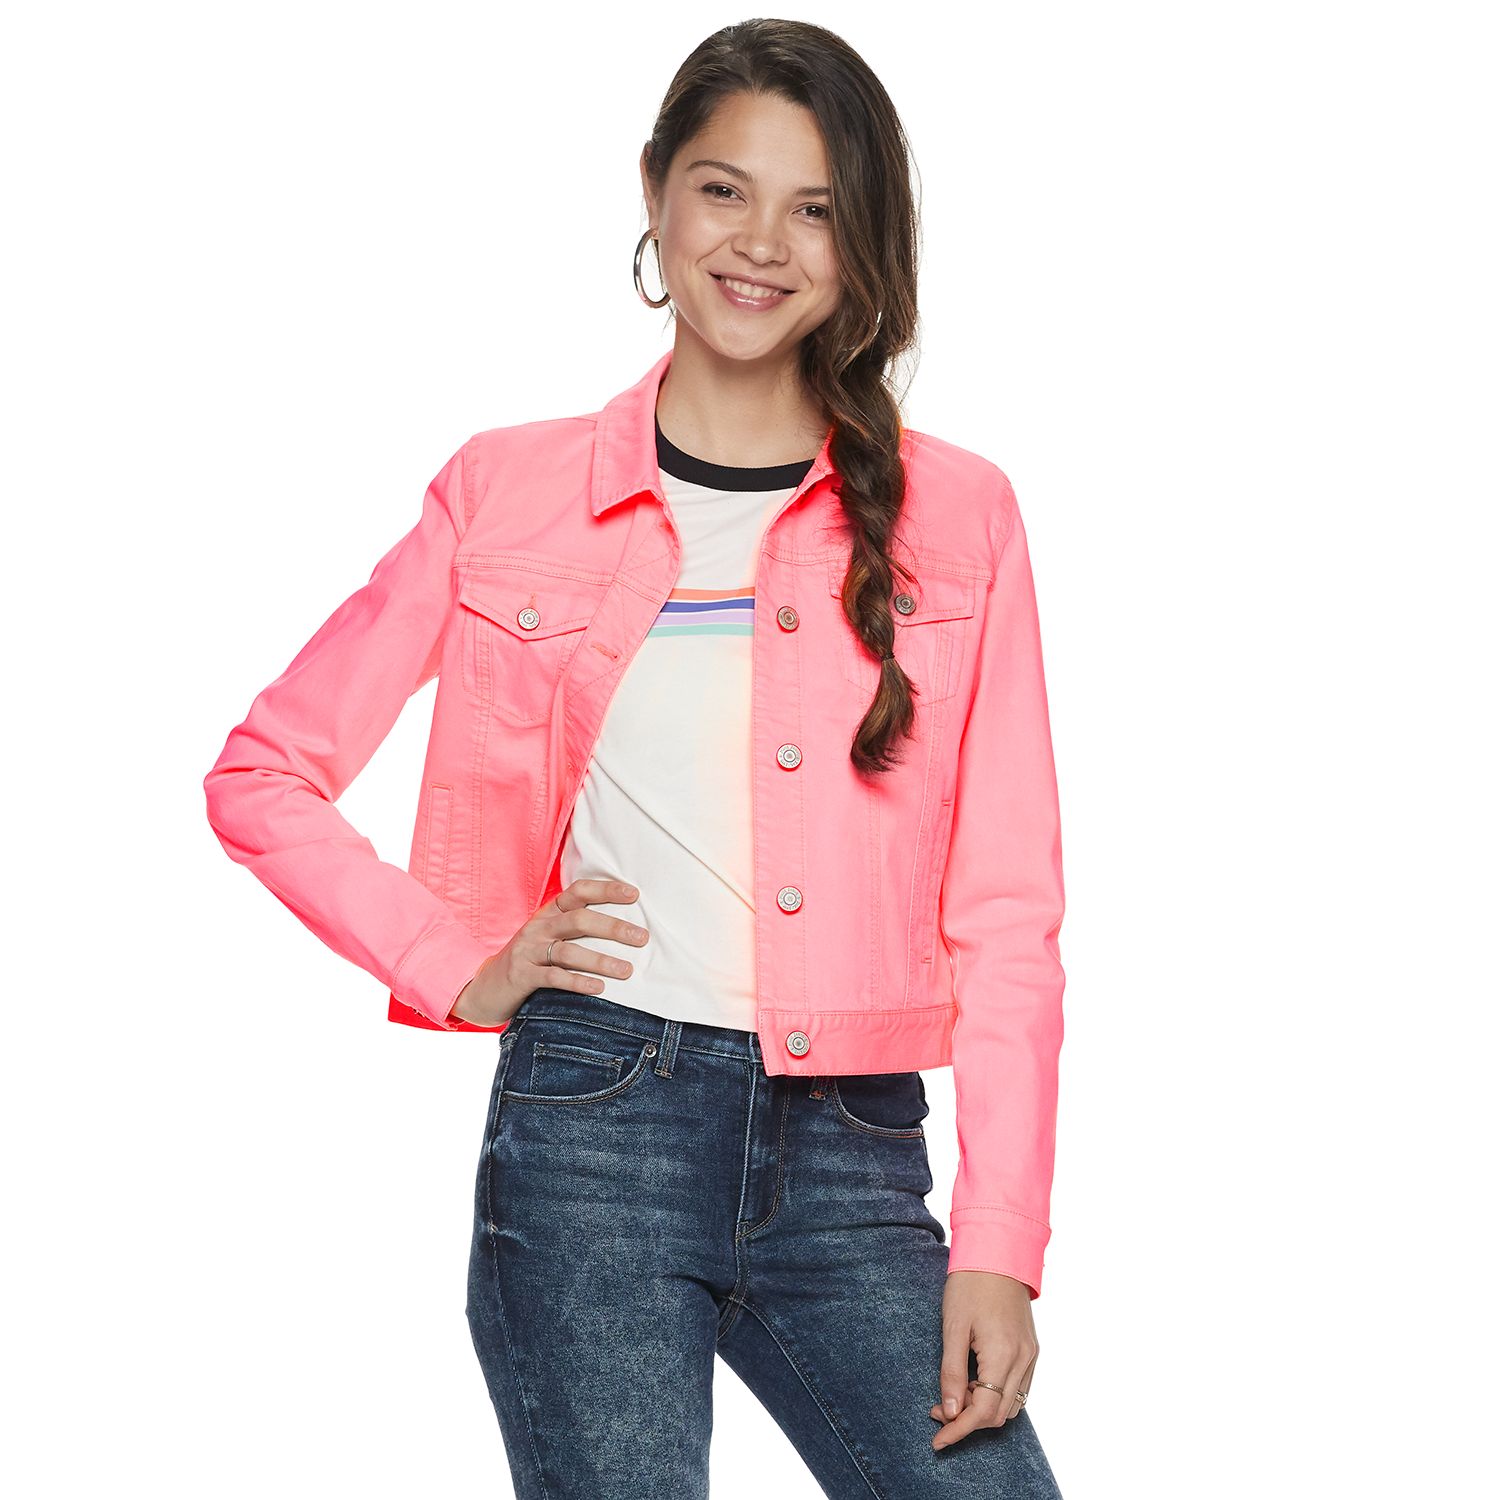 neon pink denim jacket